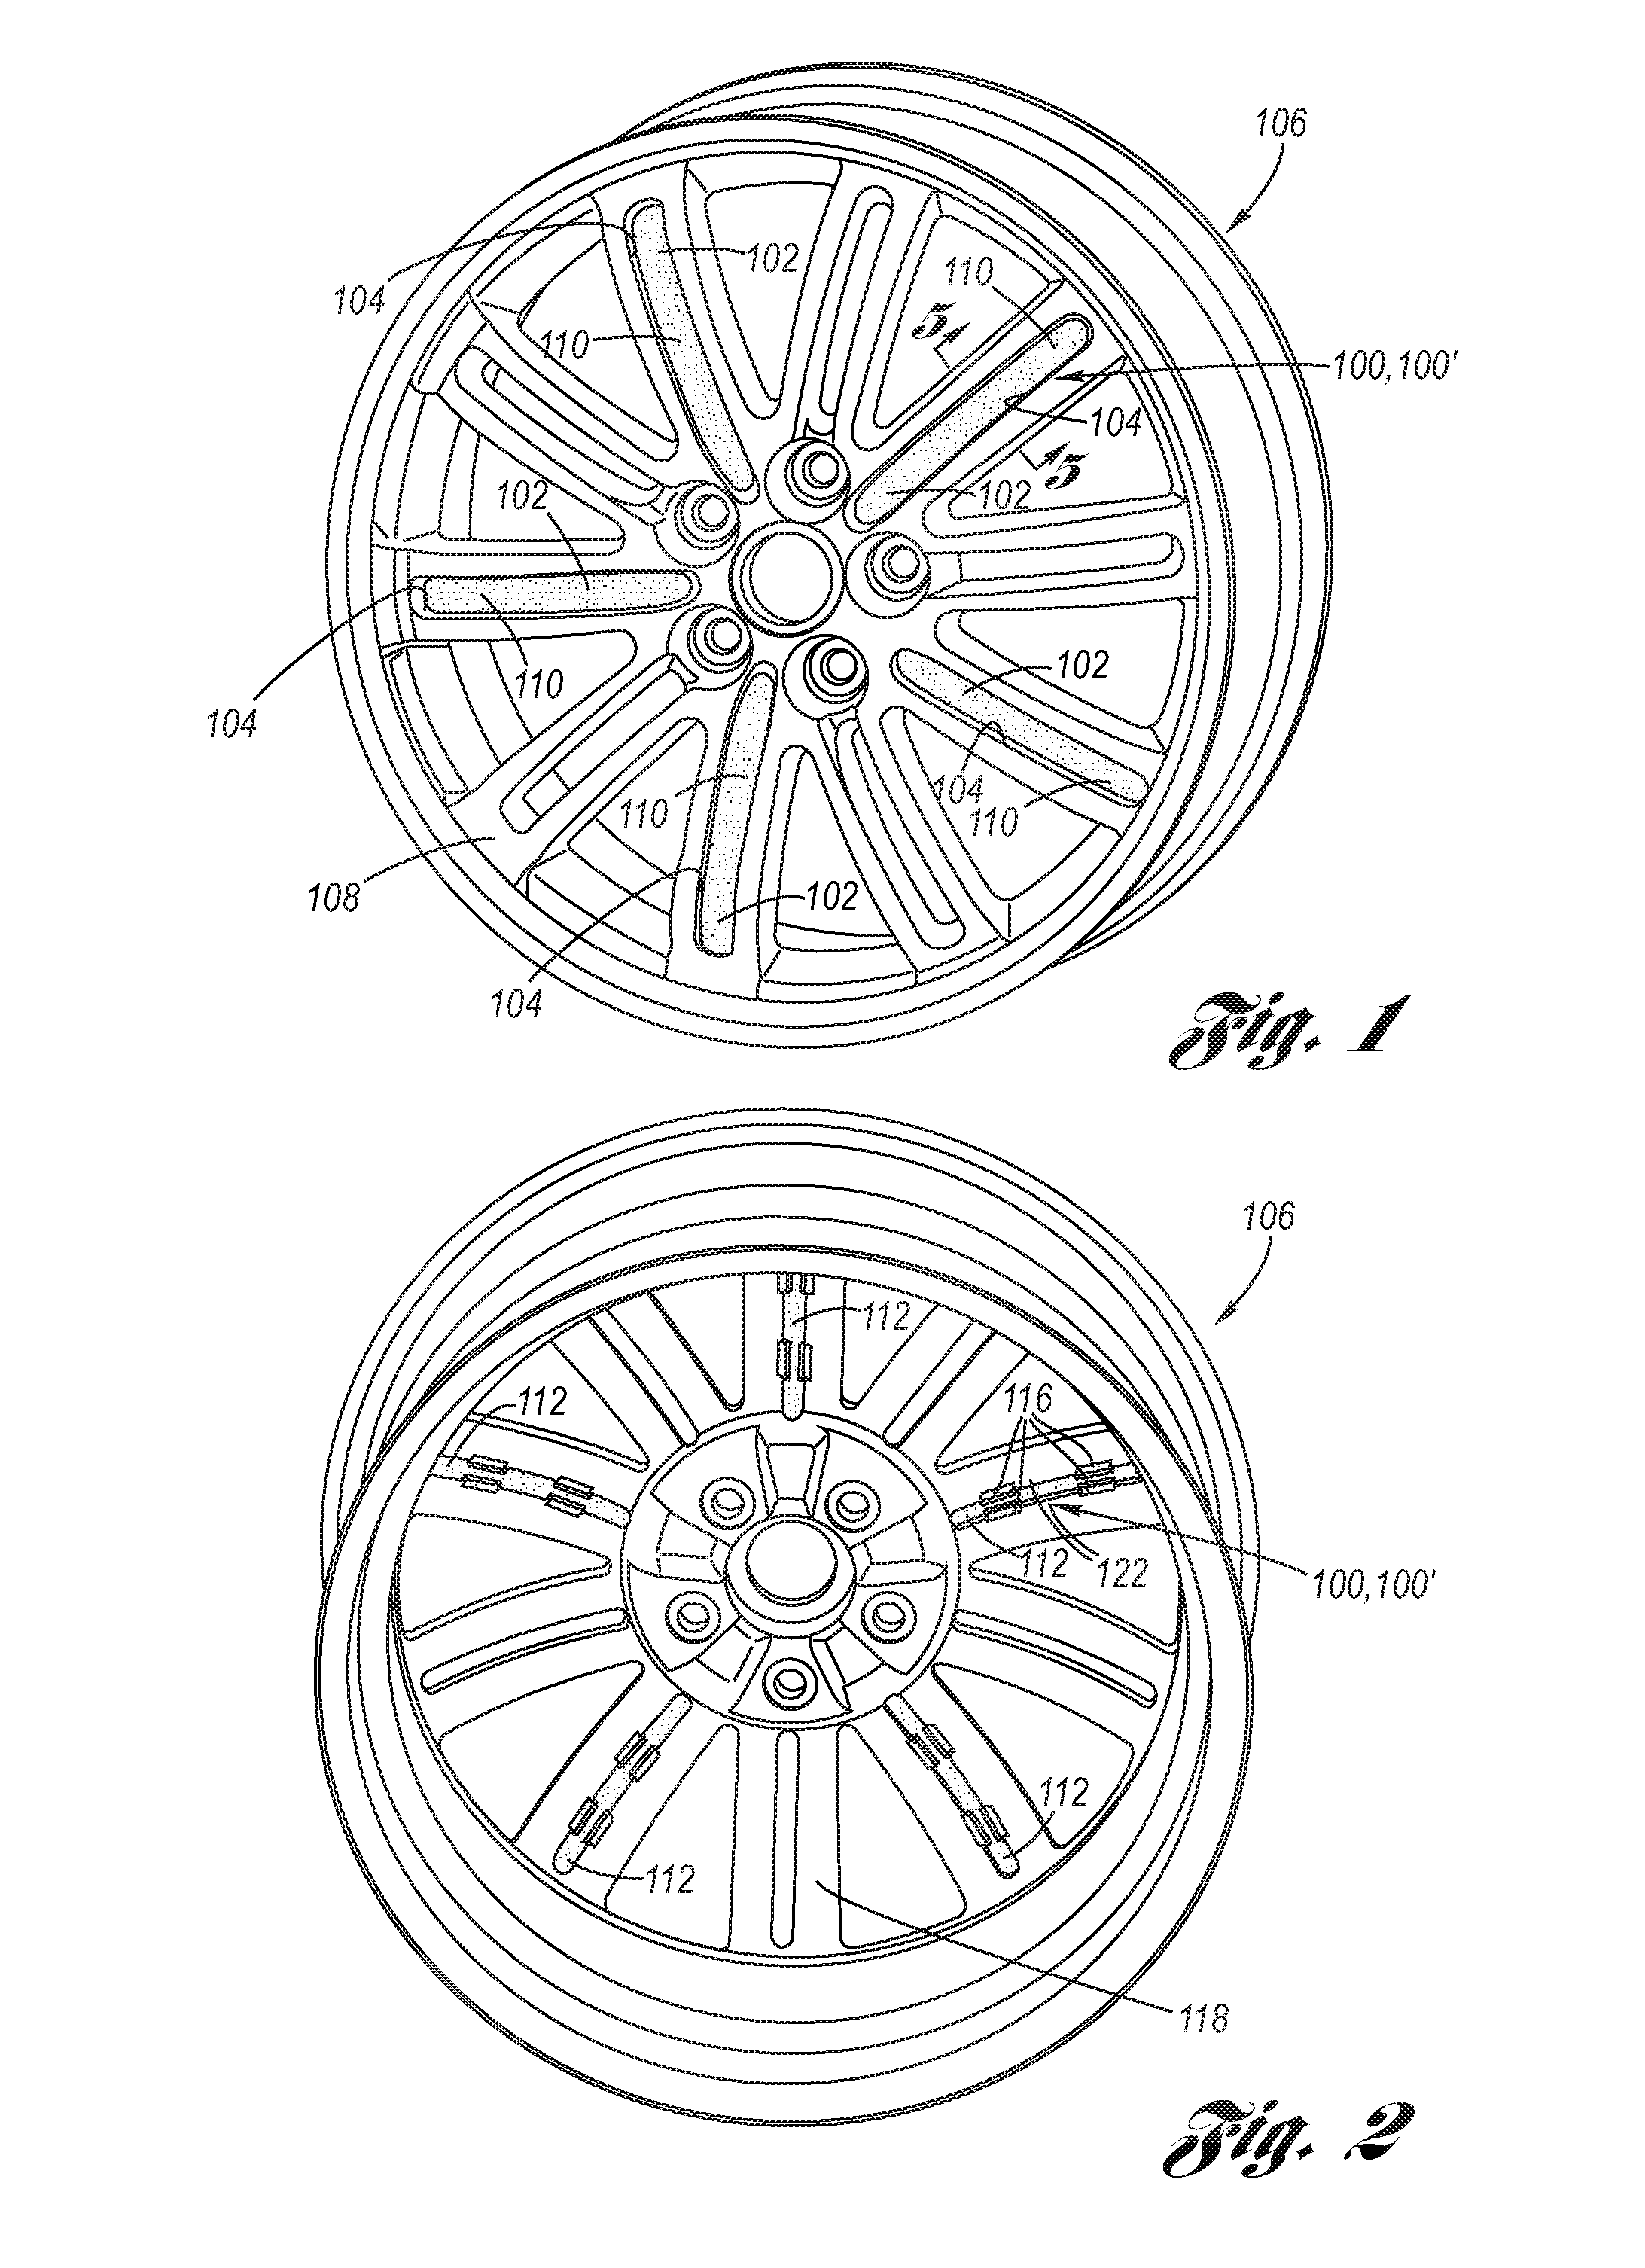 Wheel insert attachment system